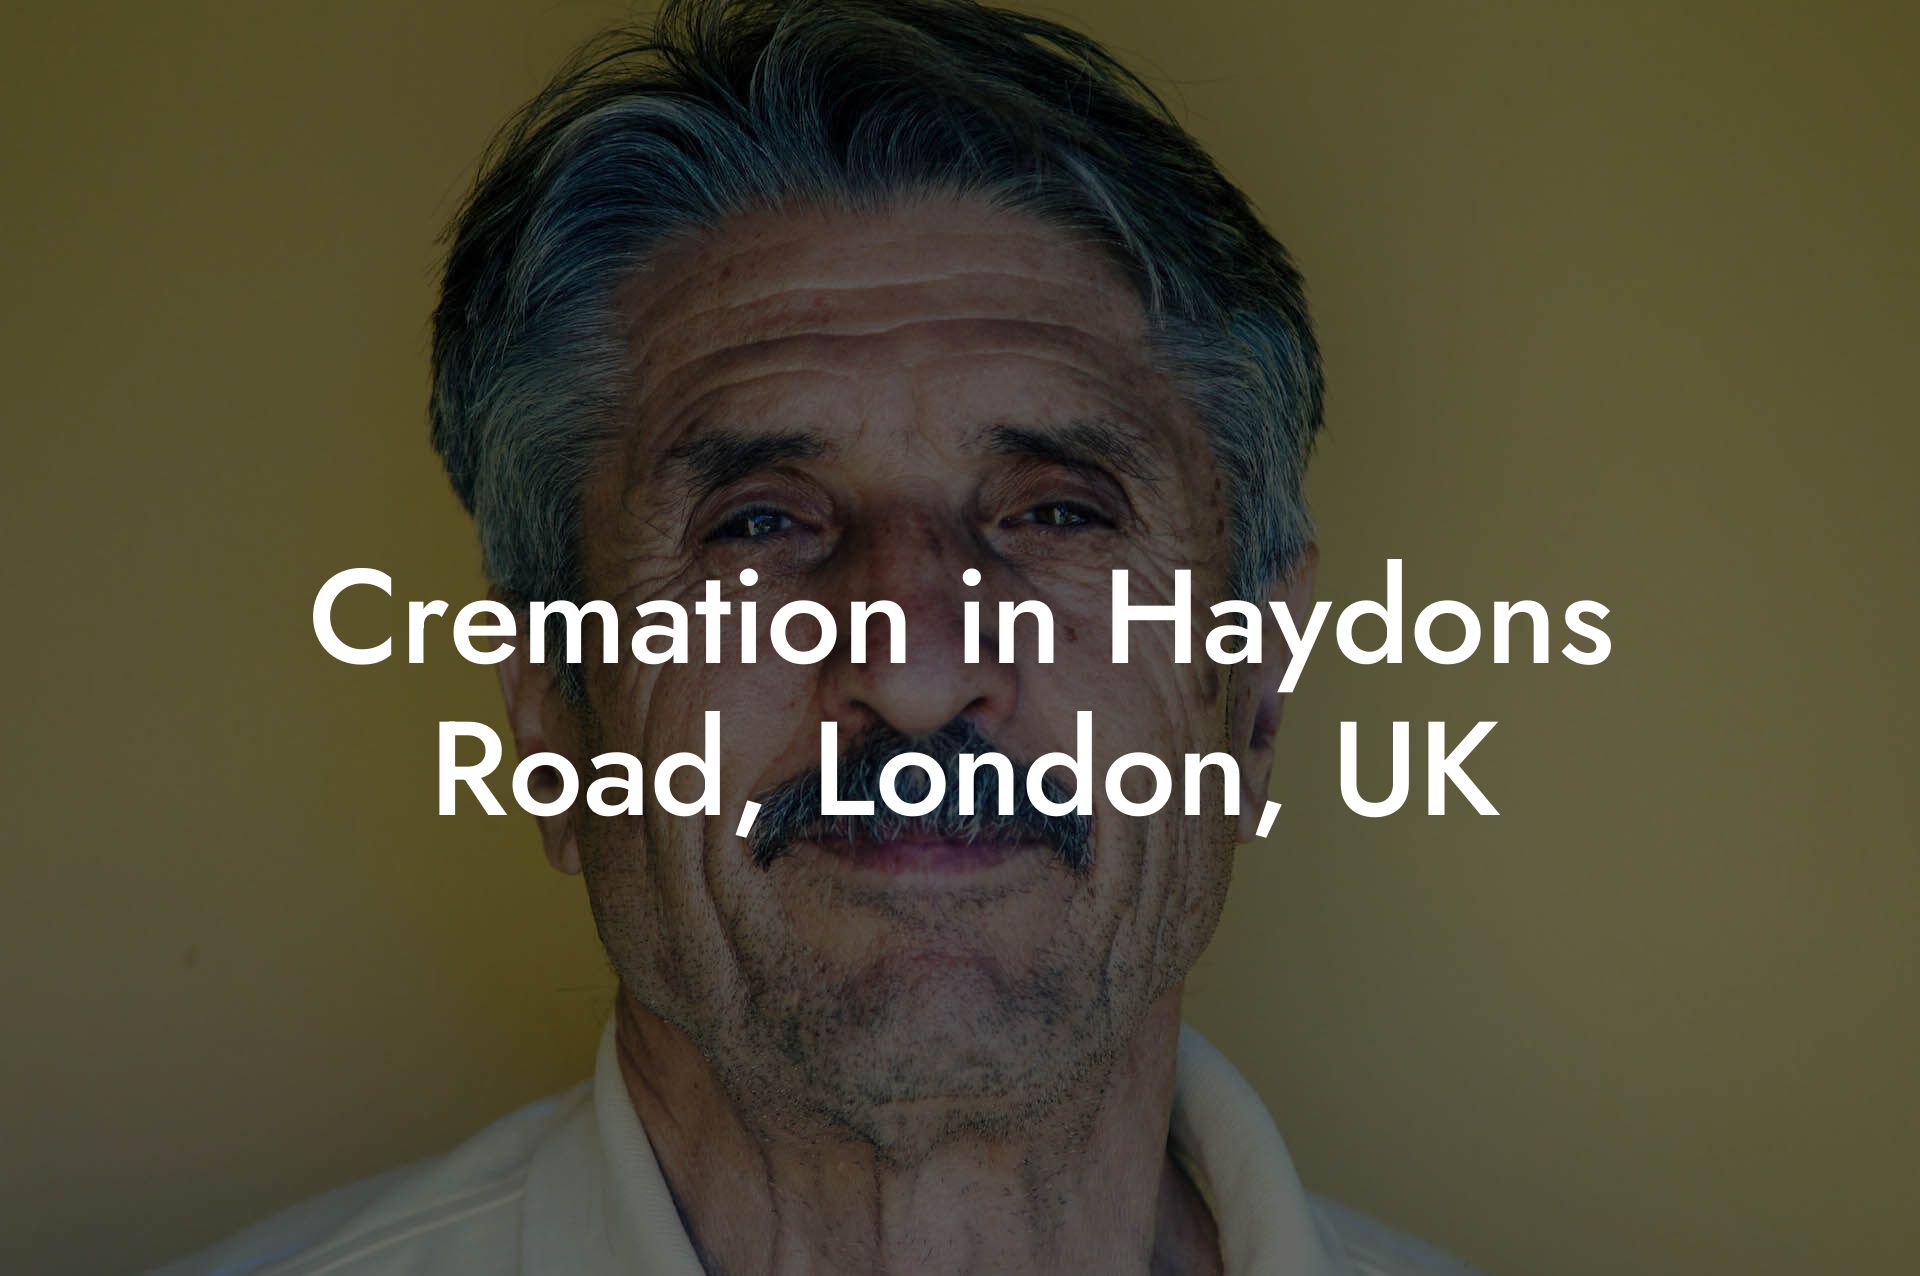 Cremation in Haydons Road, London, UK